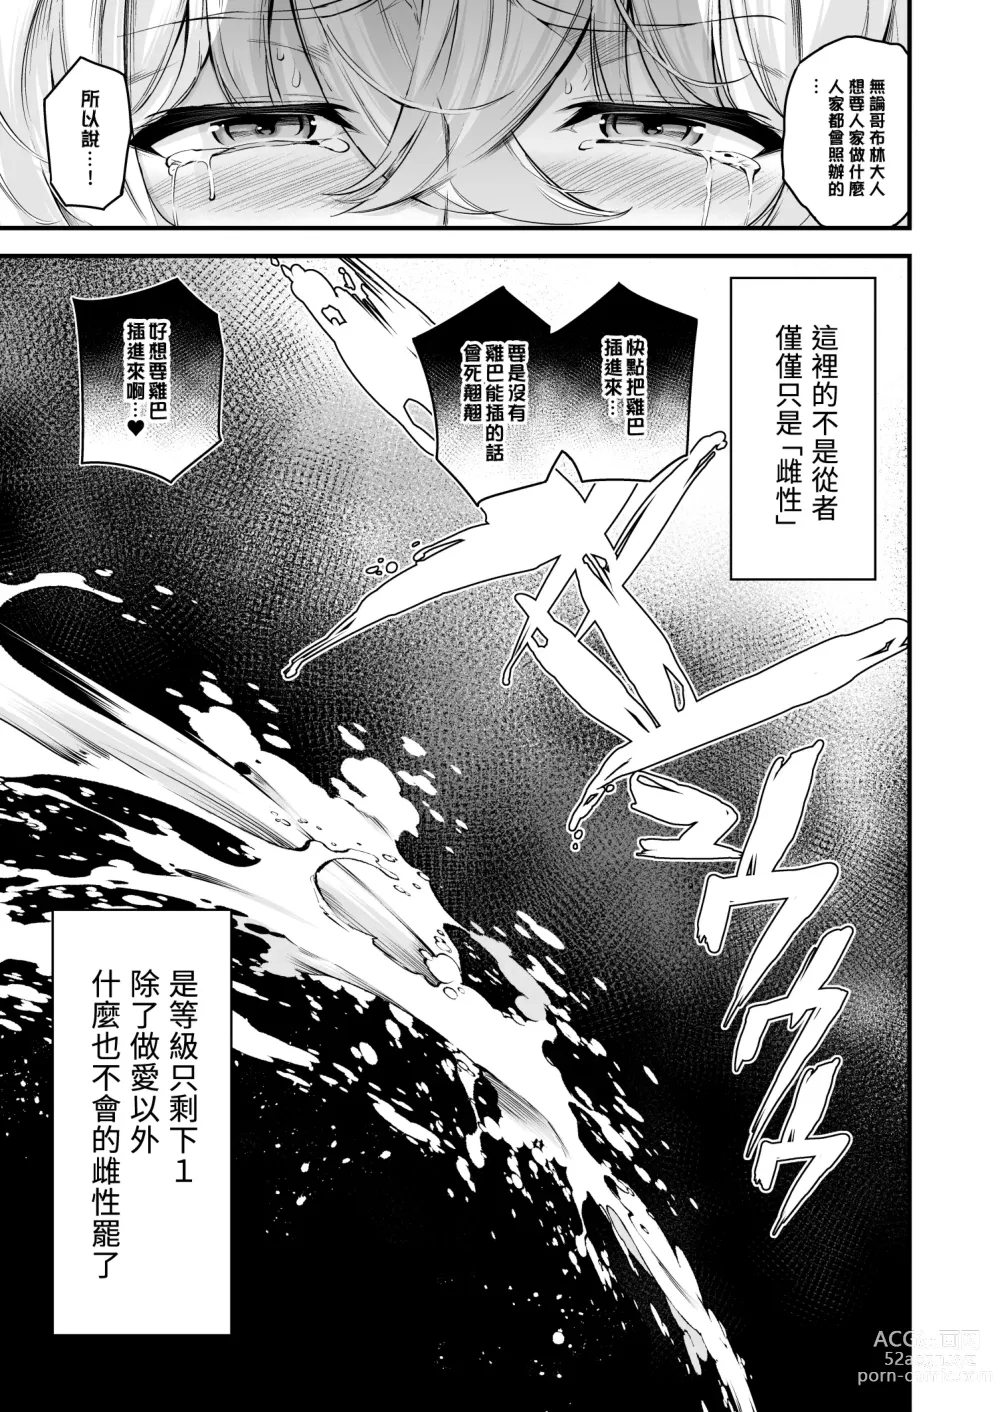 Page 32 of doujinshi Lv1 ni Naru Tokuiten  - Singularity that becomes Lv1